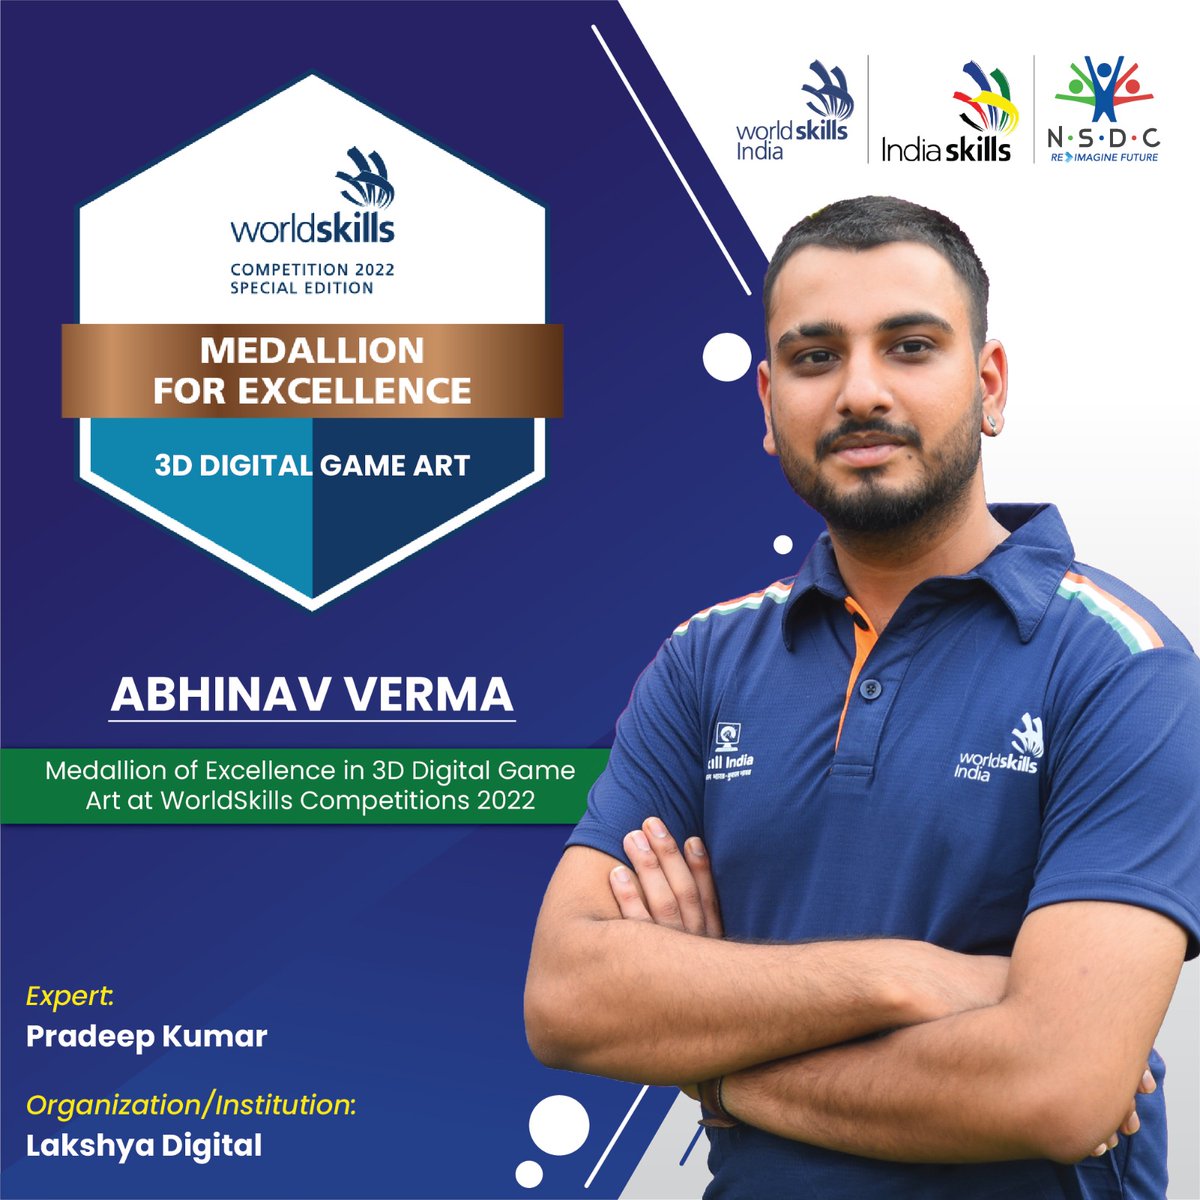 ABHINAV VERMA's journey embodies life's twists. Despite challenges, his determination won him the Medallion of Excellence in 3D Digital Game Art at WorldSkills 2022, inspiring global recognition.

#TeamIndia #3DArt #SkillsForTheFuture #IndiaSkills #Skillindia #NSDE #MSDE